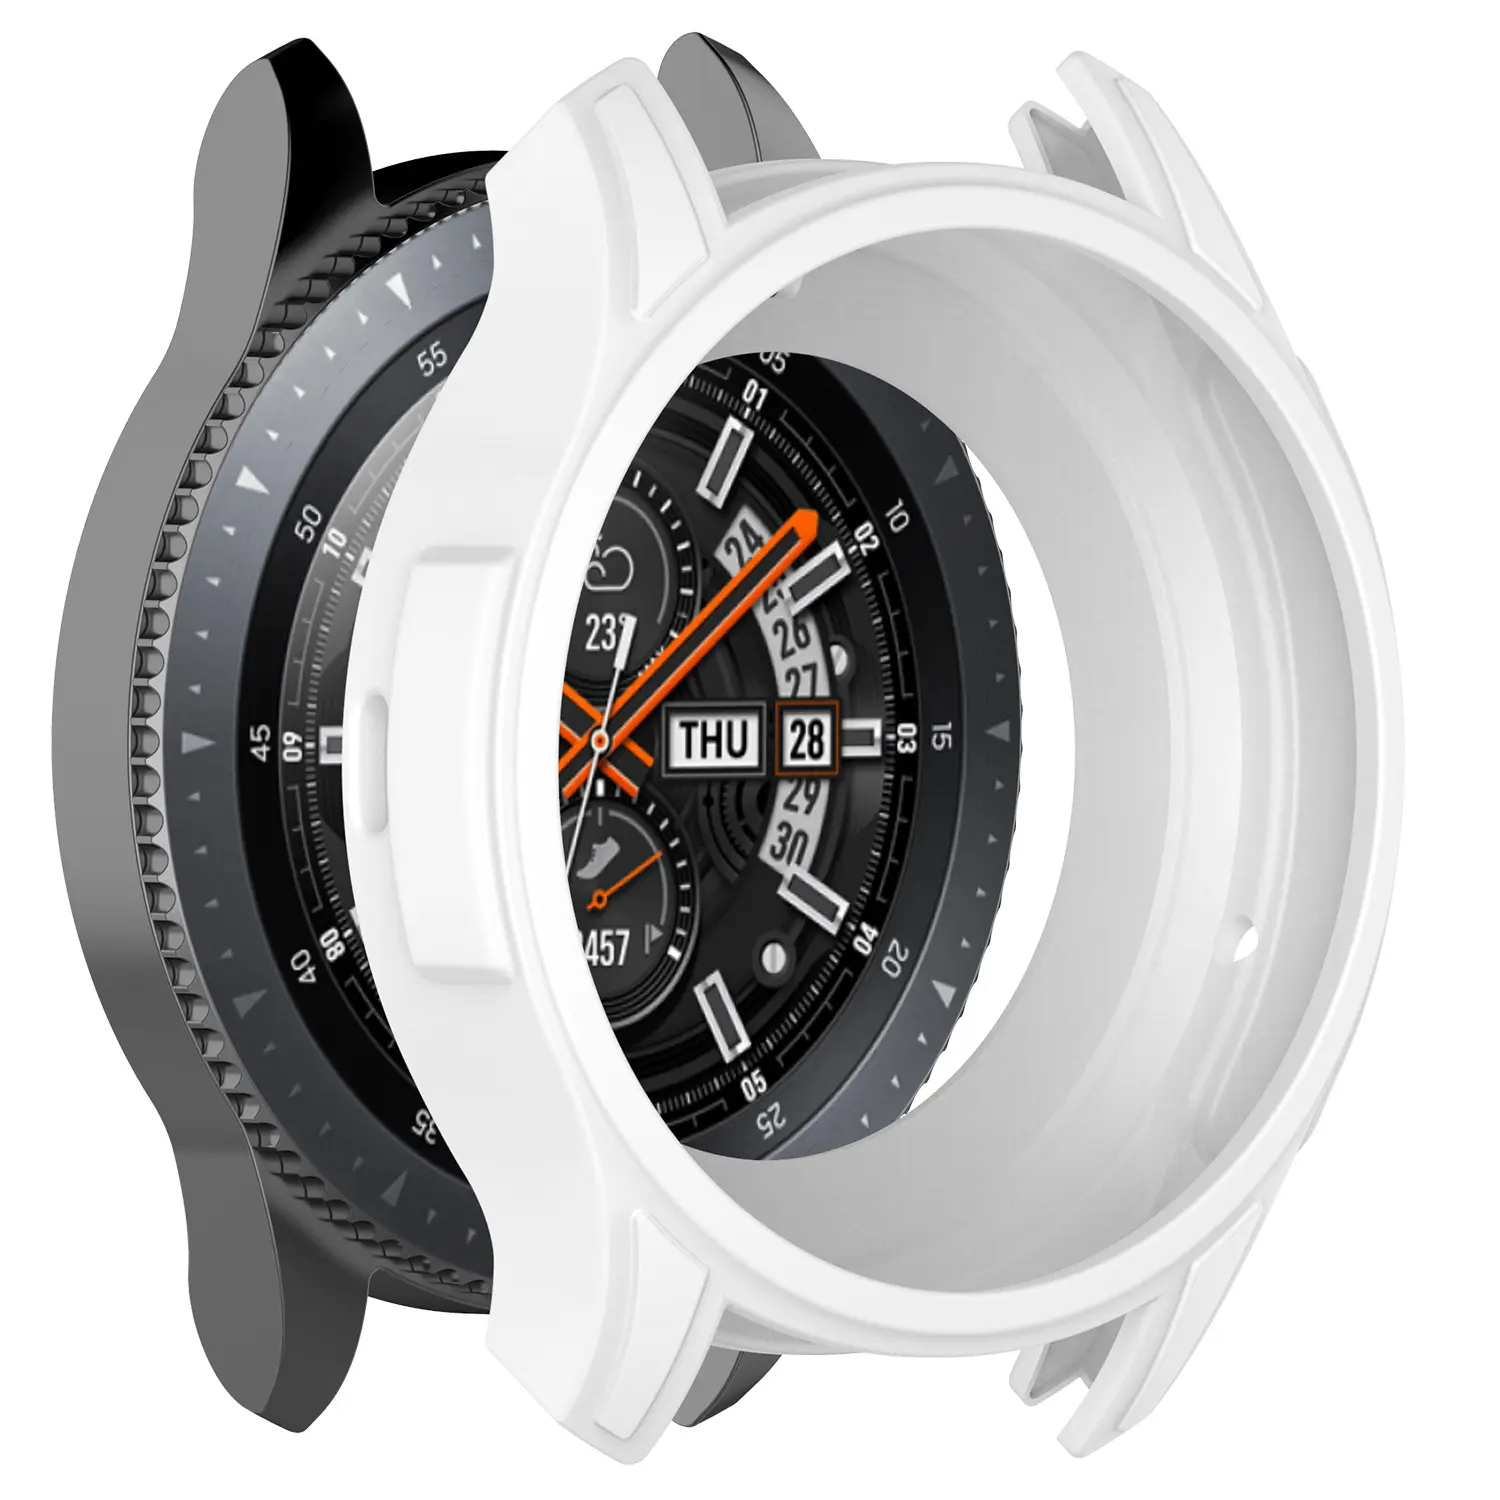 Ốp bảo vệ đồng hồ Silicon cho Samsung Gear S3 Frontier Ốp bảo vệ Galaxy Watch Ốp Chống rơi thể thao 46mm